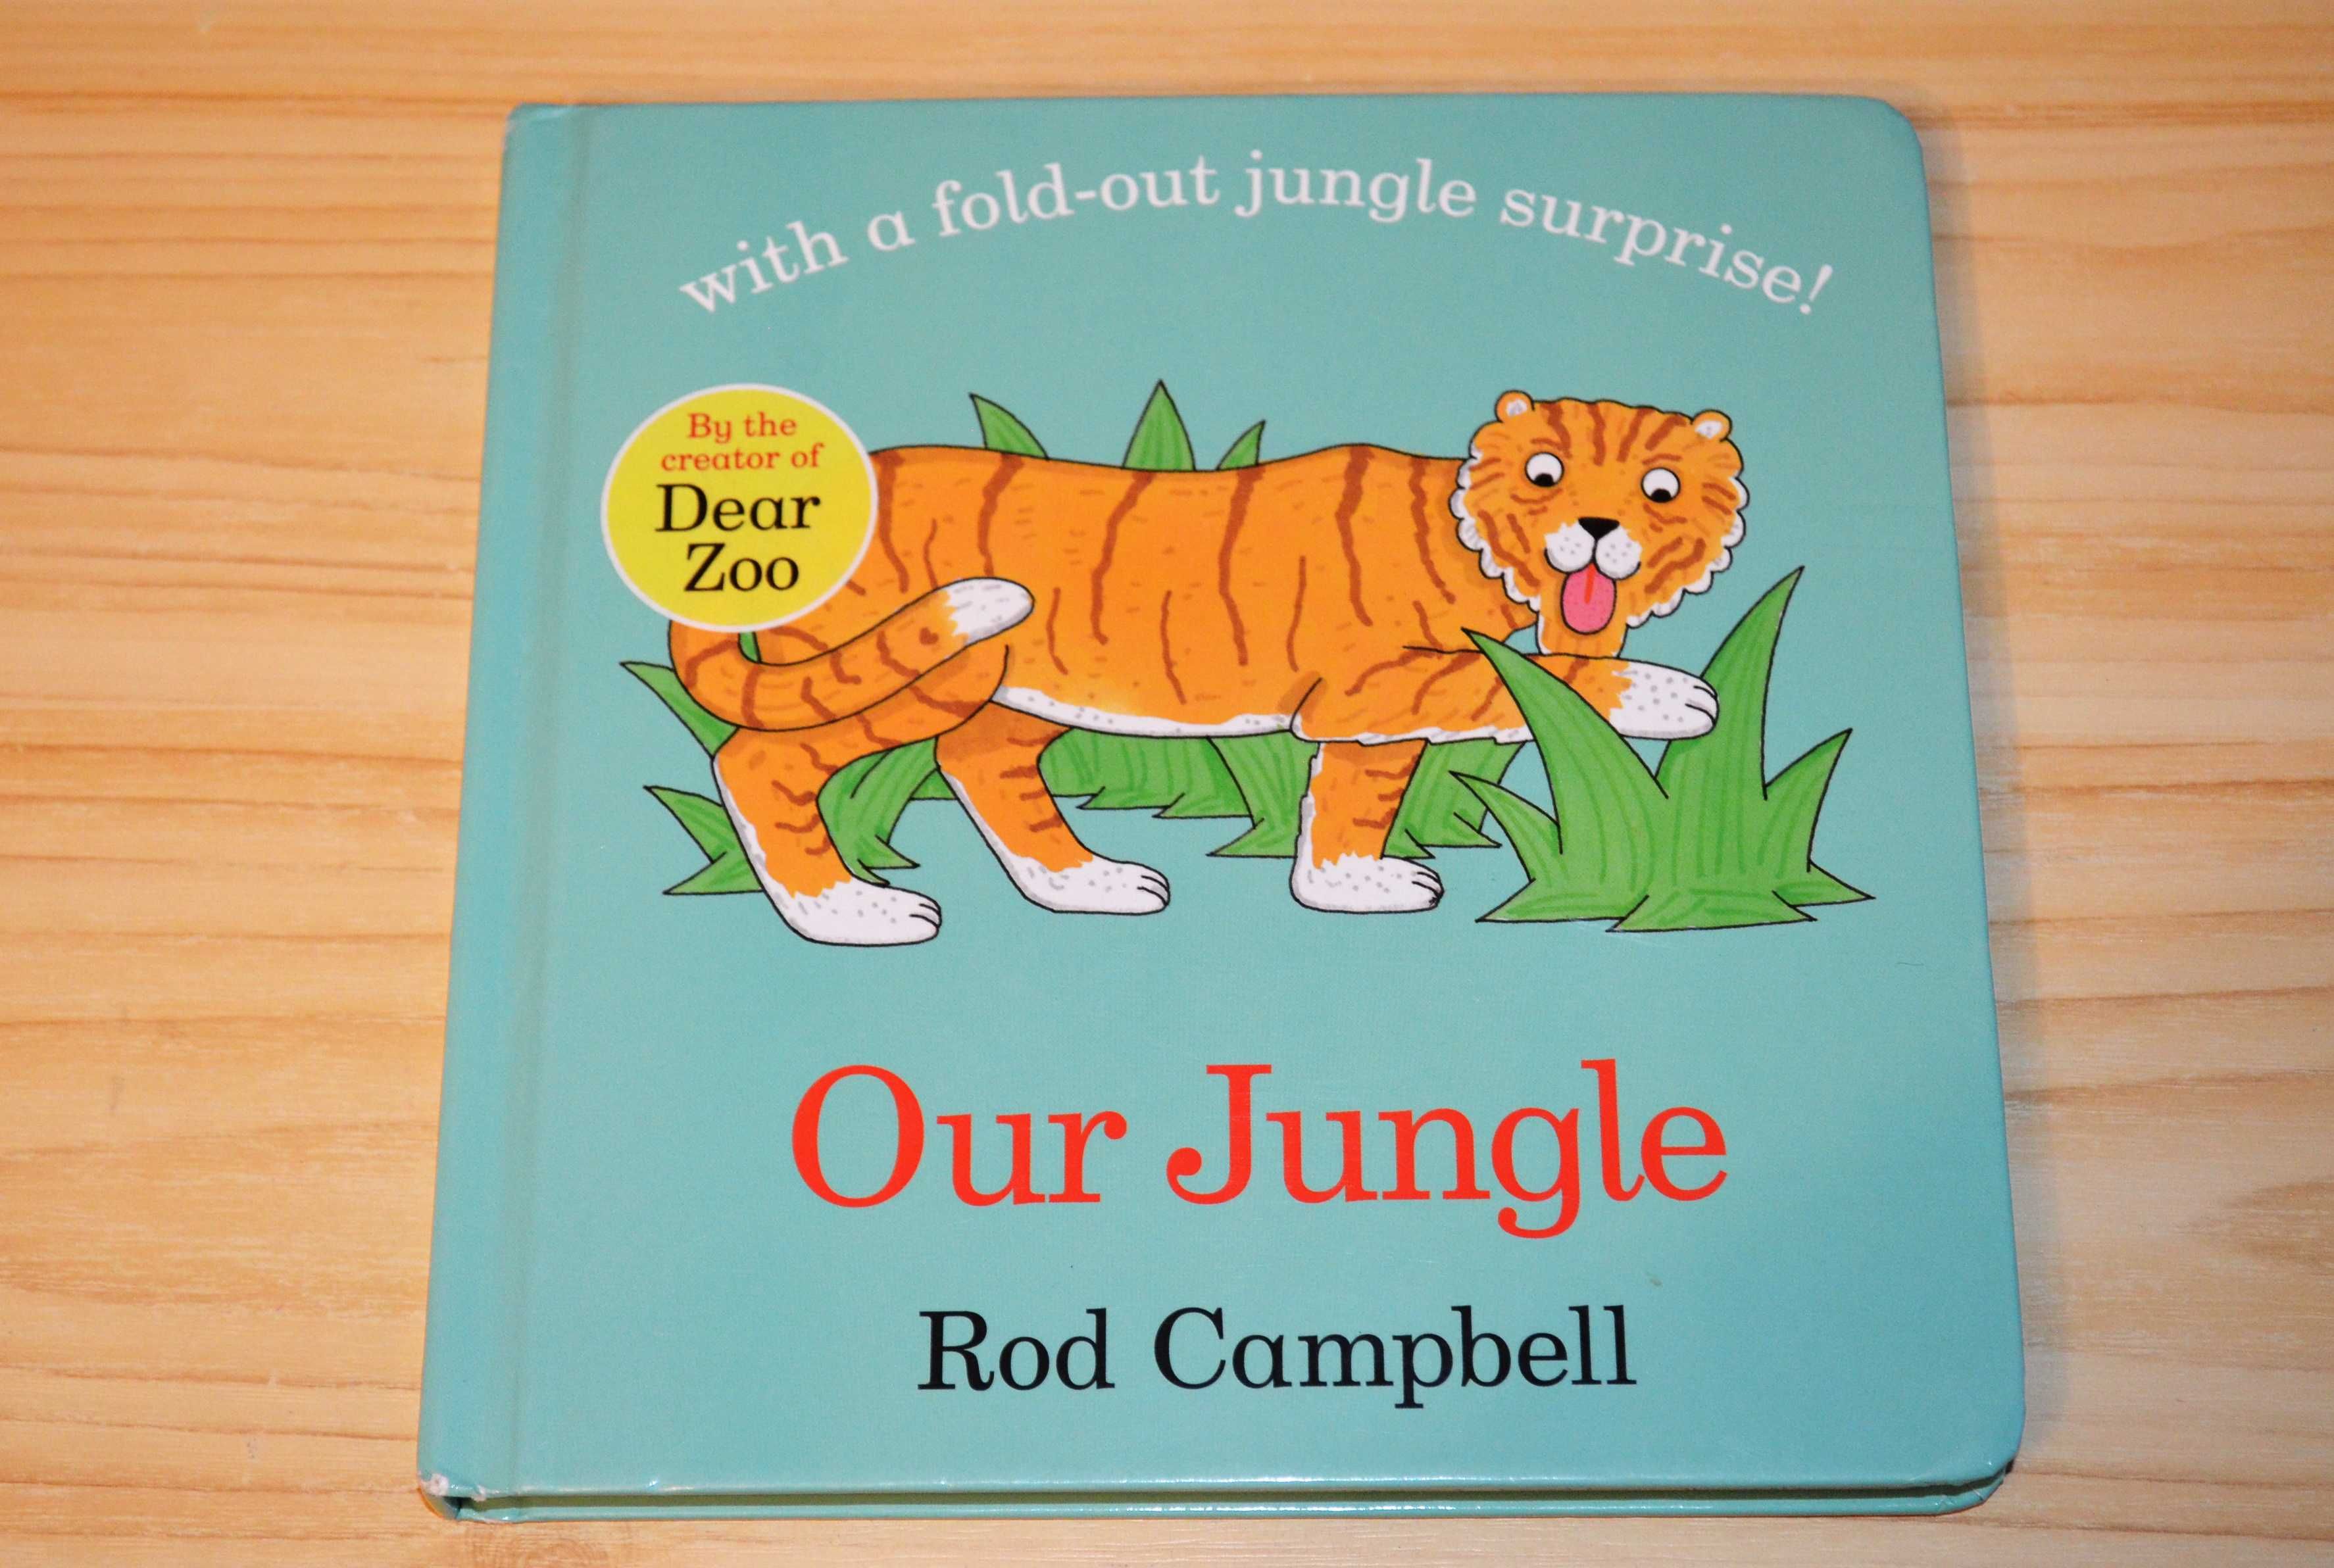 Our jungle by rod campbell, дитяча книга англійською